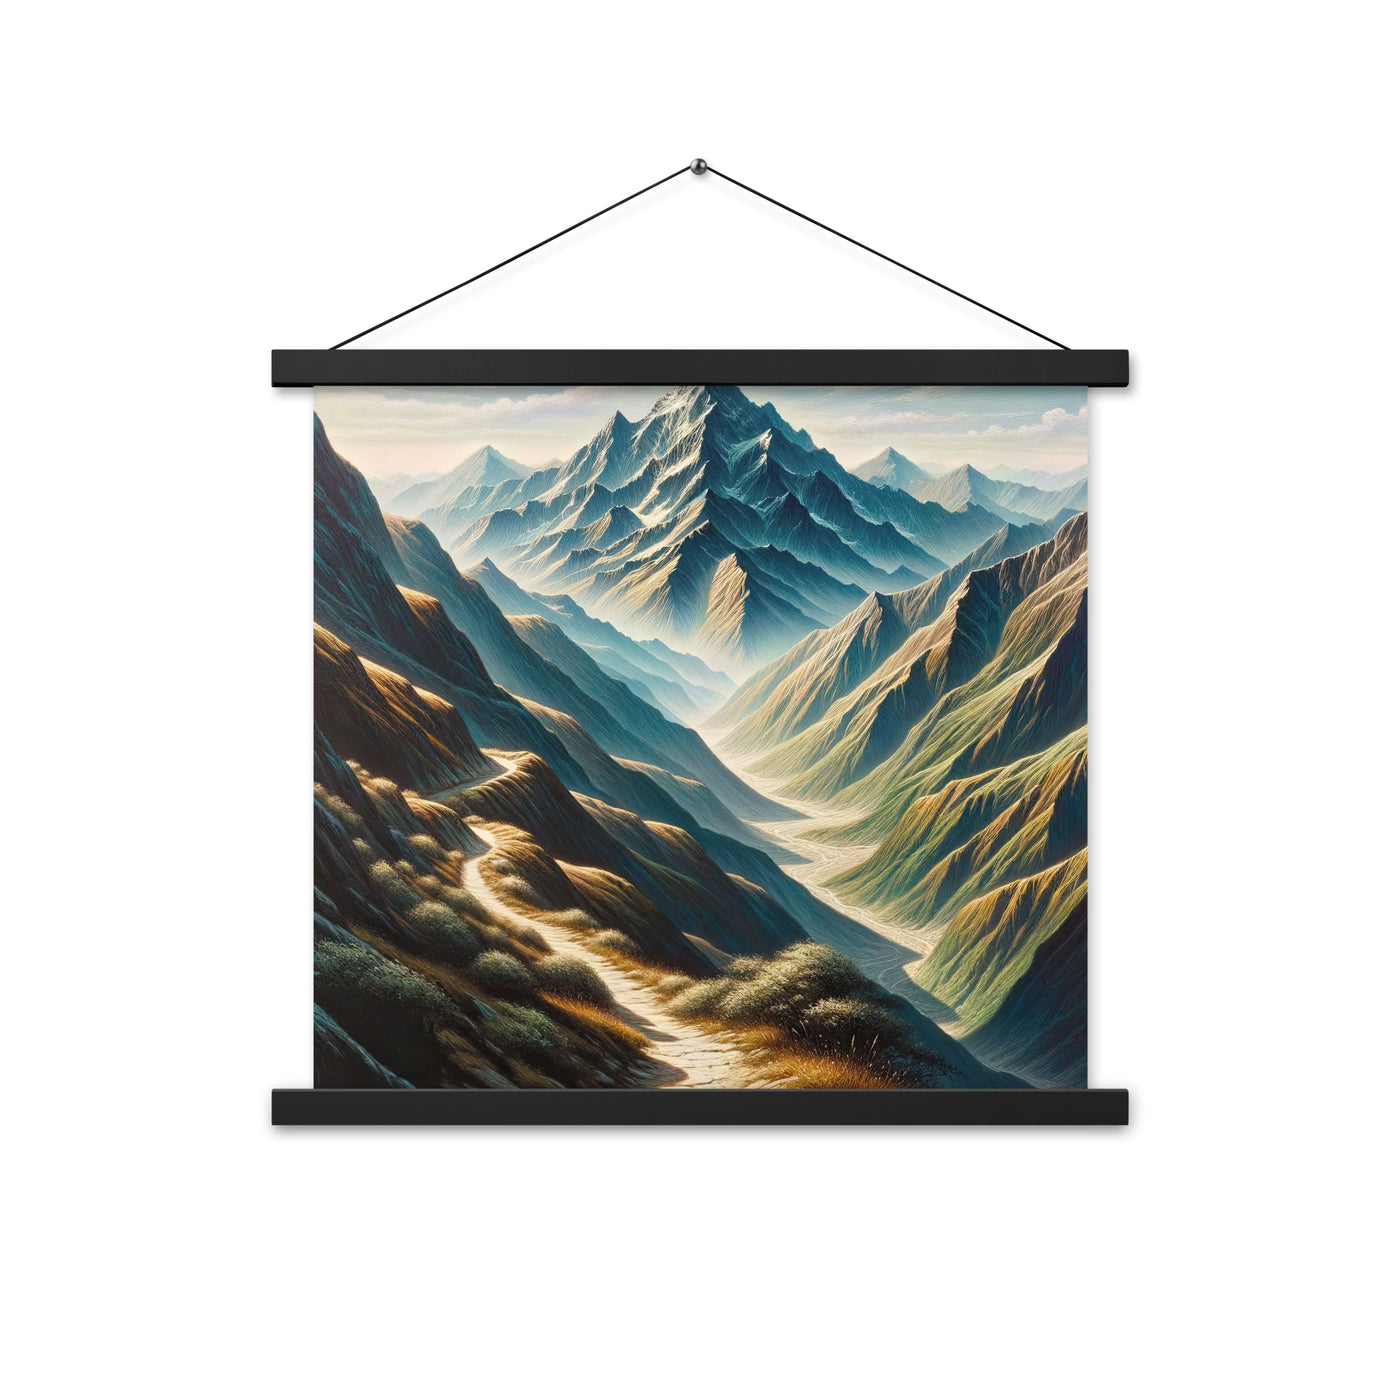 Berglandschaft: Acrylgemälde mit hervorgehobenem Pfad - Premium Poster mit Aufhängung berge xxx yyy zzz 45.7 x 45.7 cm